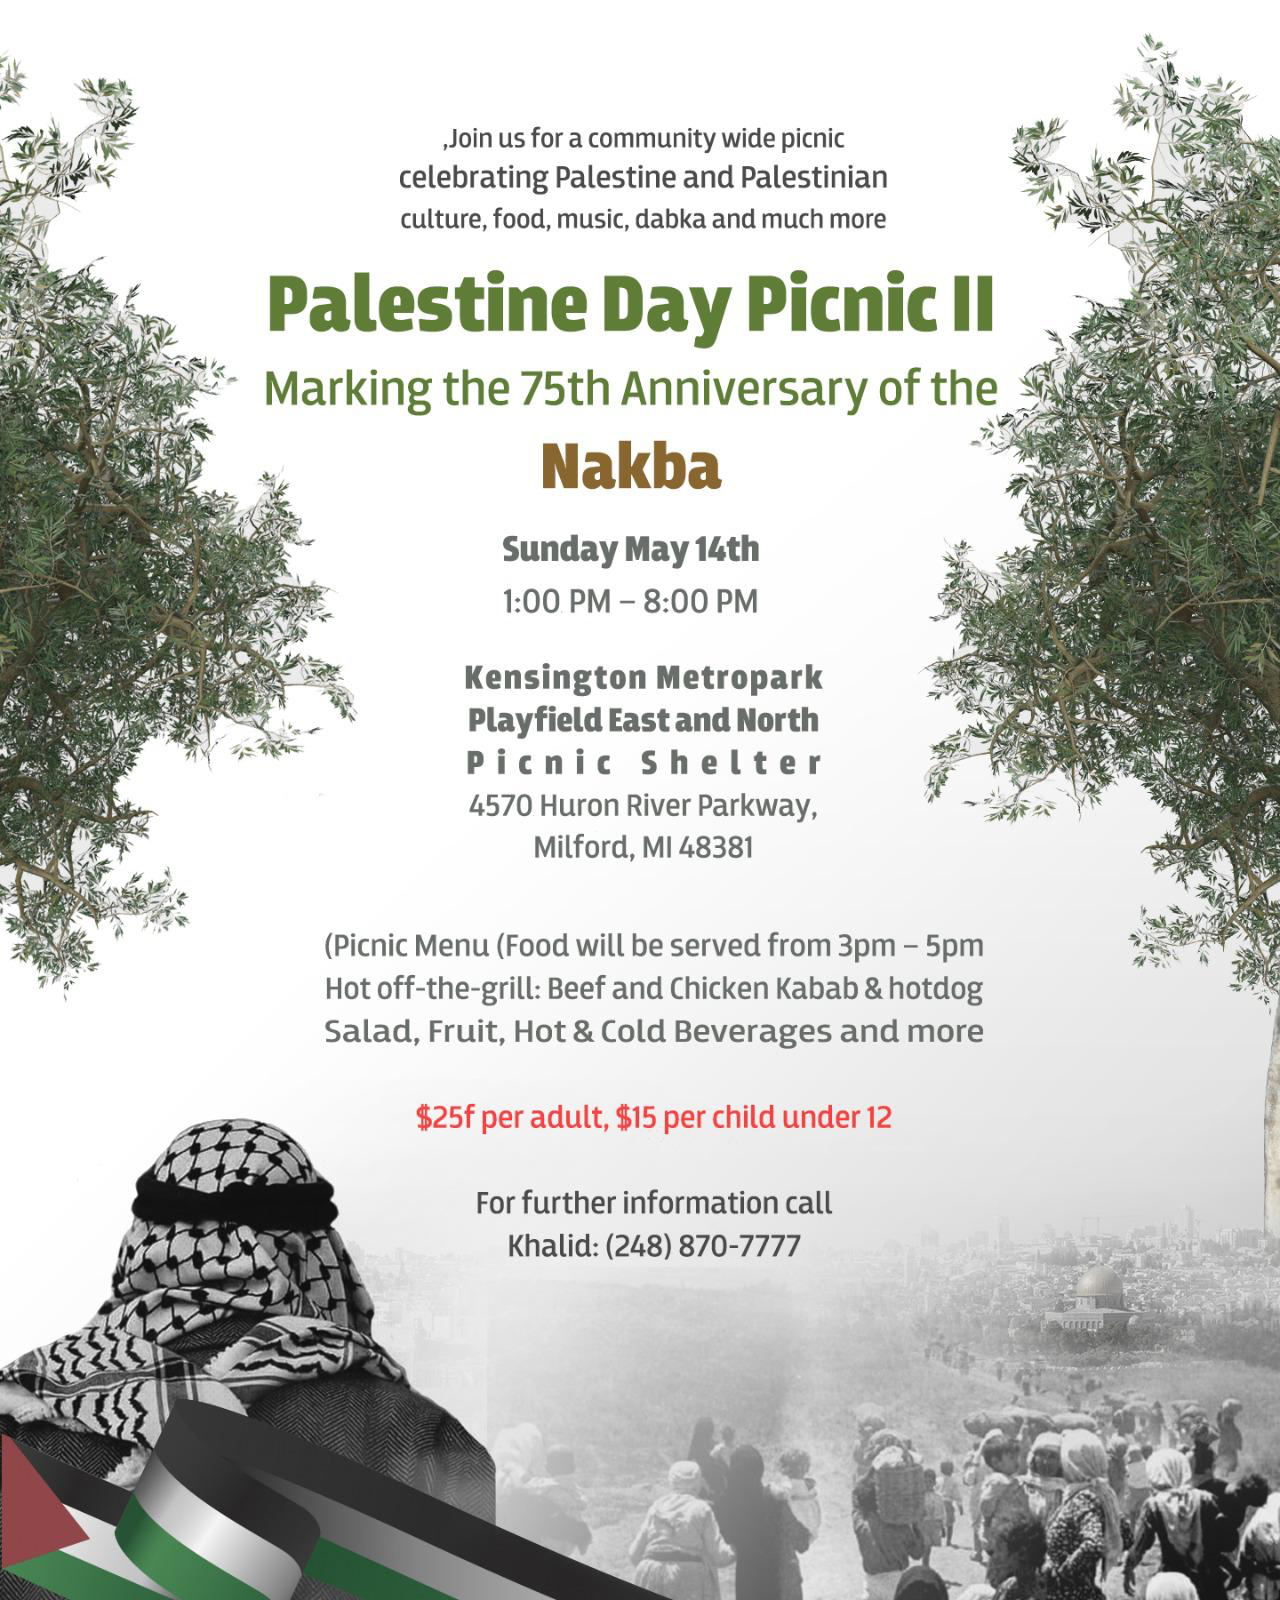 Palestine Day Picnic II: Marking the 75th Anniversary of the Nakba